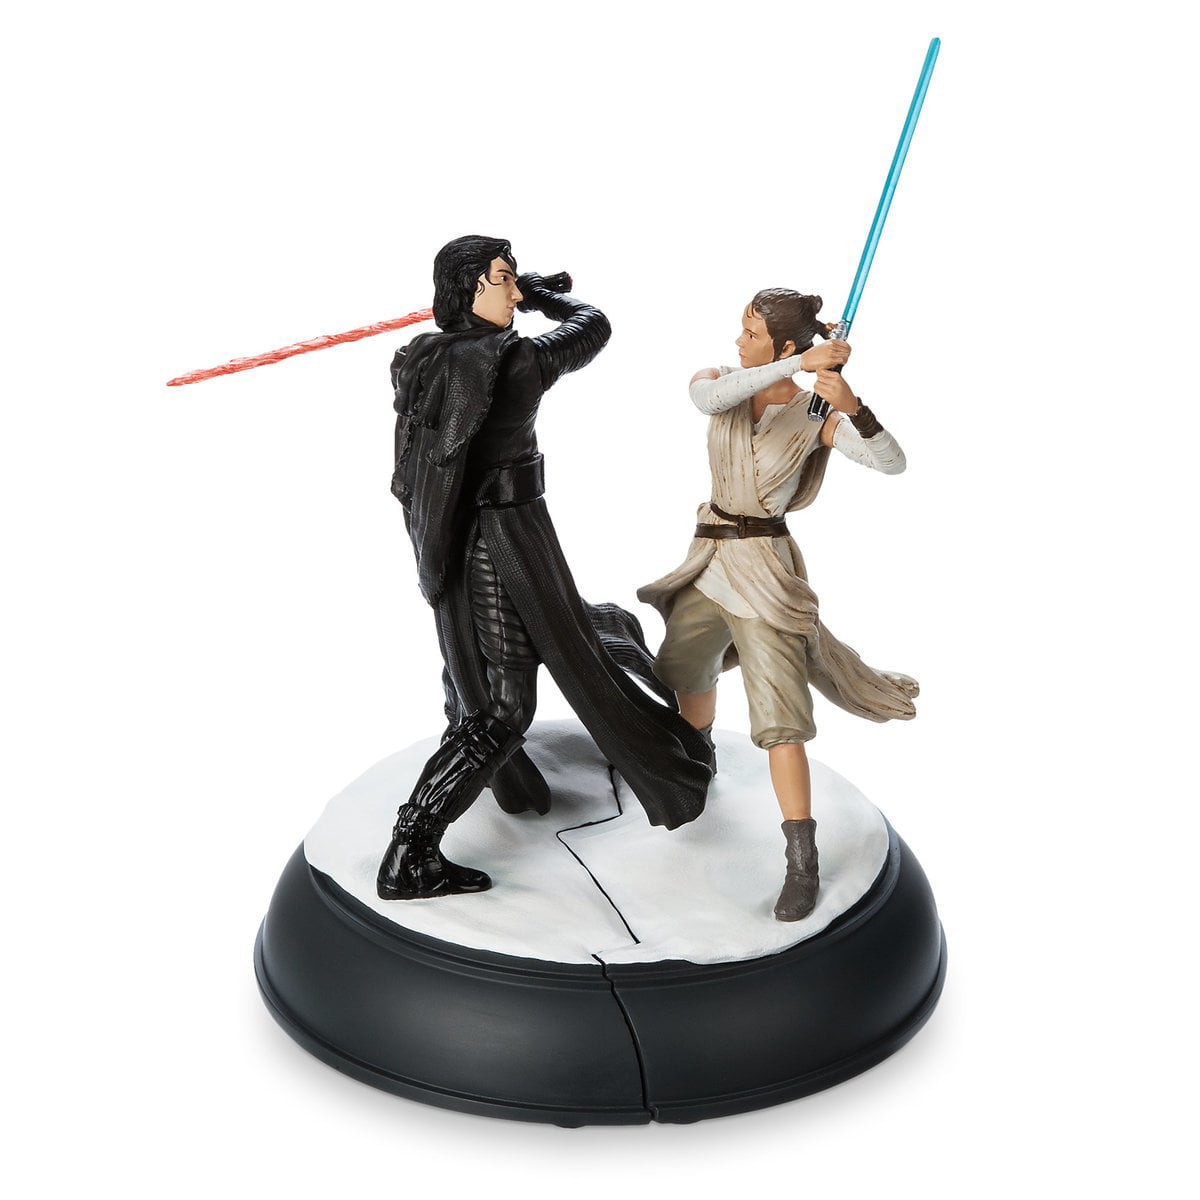 Disney Parks Kylo Ren and Rey Figurine Set Star Wars The Force Awakens New